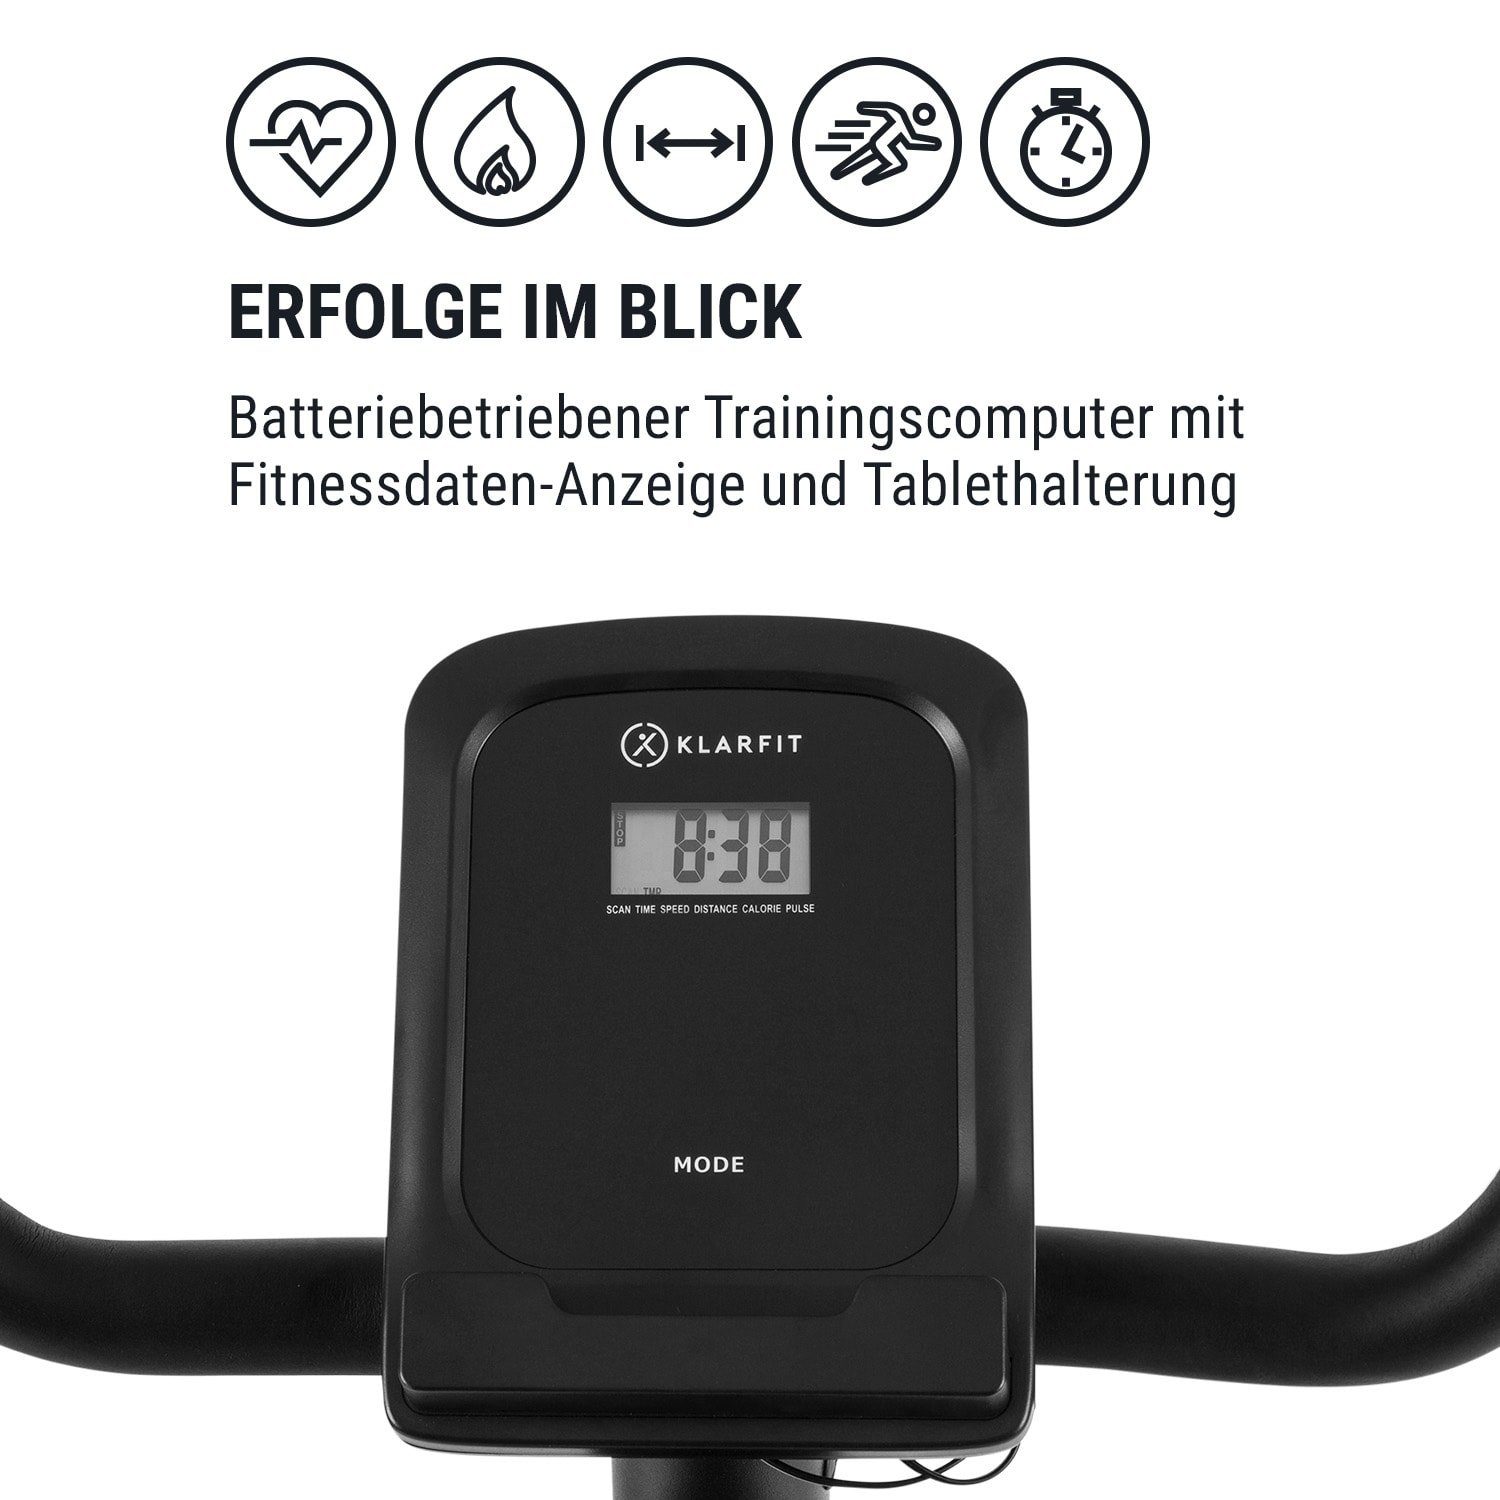 KLARFIT Heimtrainer Tauon (Tablet-Halterung ;pullsmesser;Trainingscomputer mit LCD-Display)